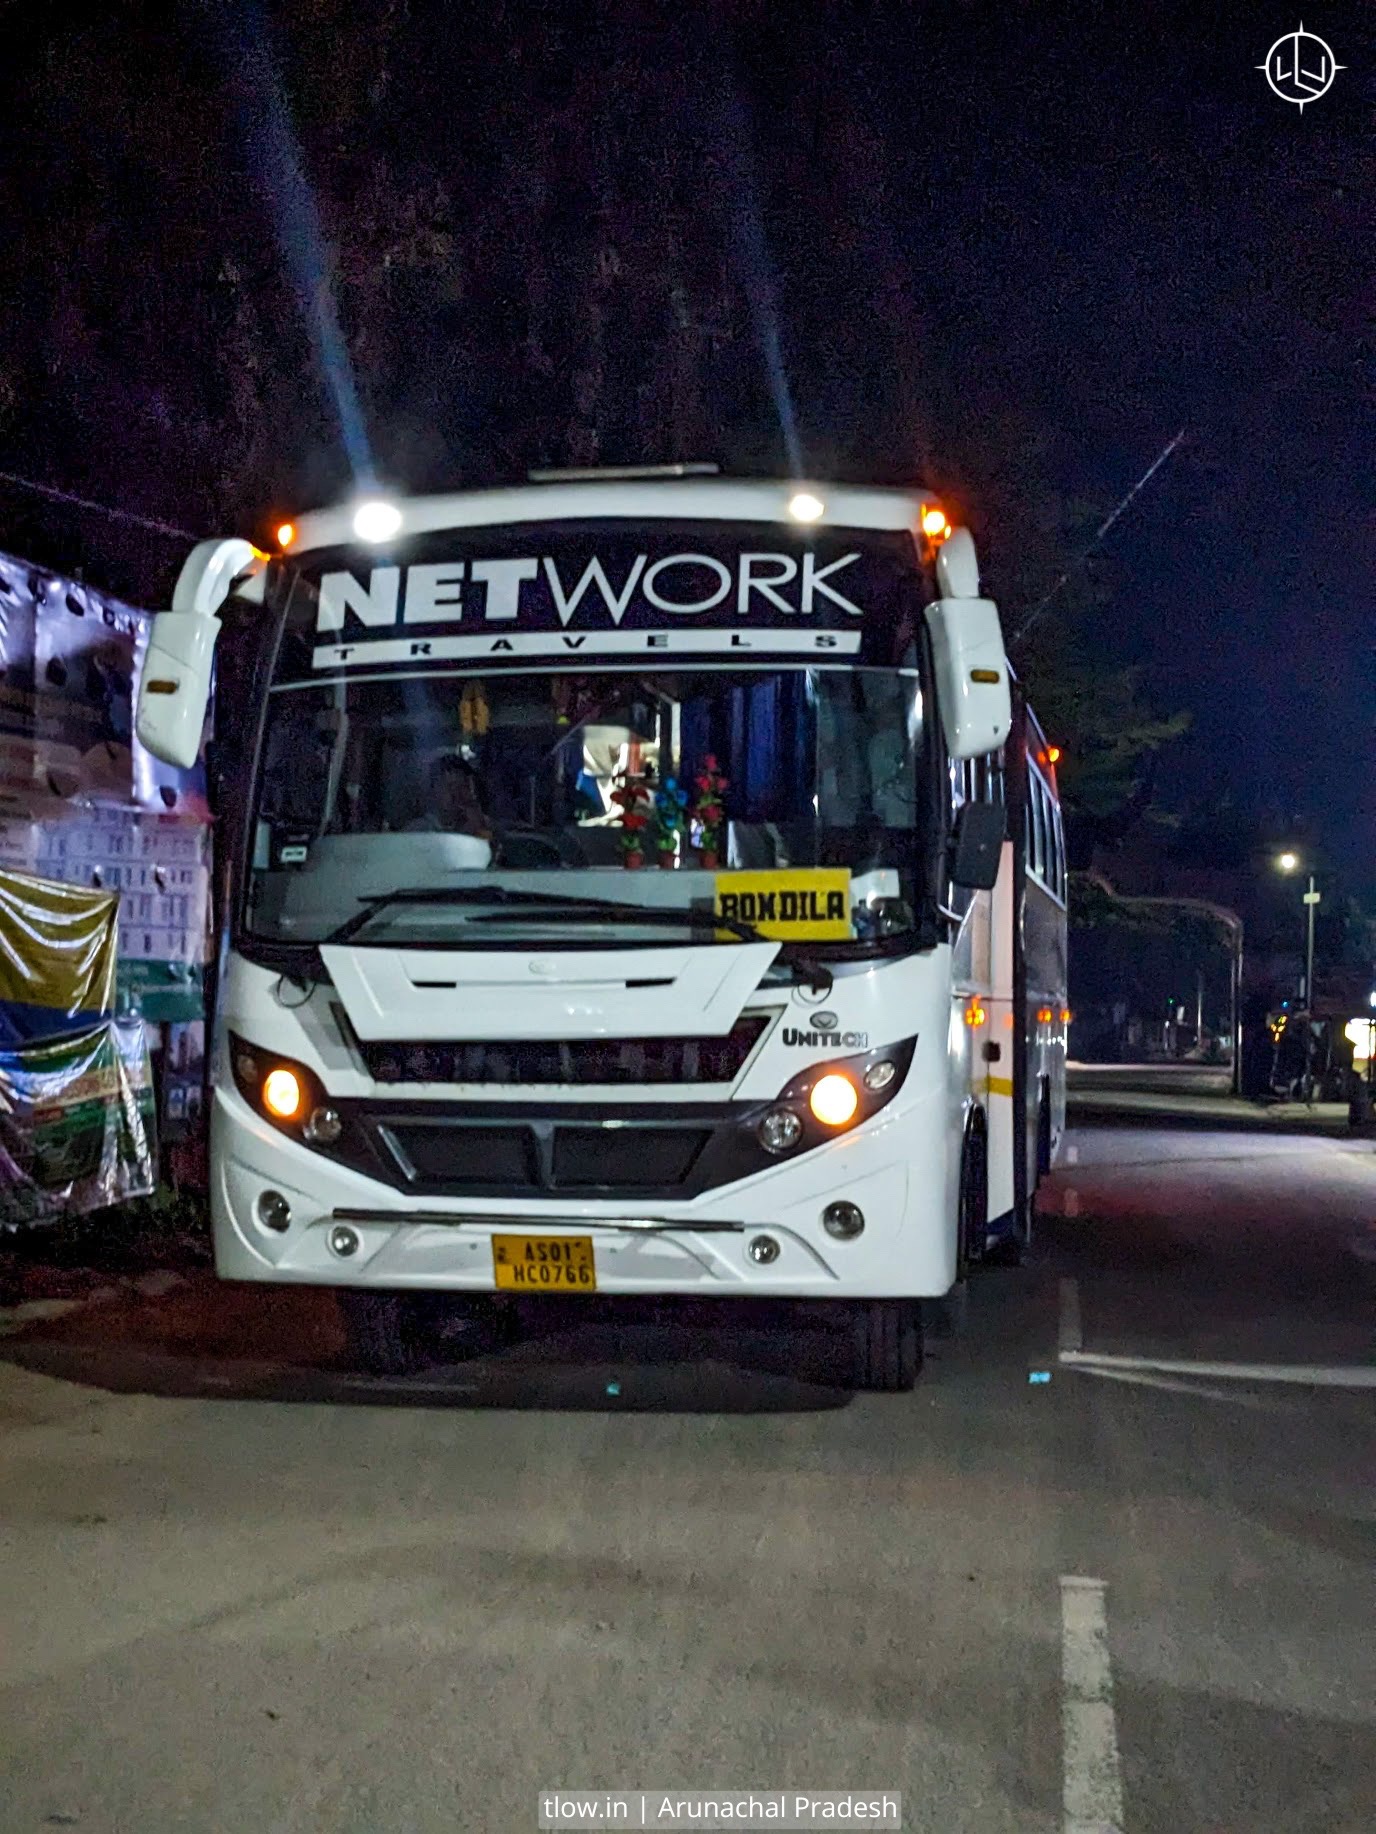 Network bus in Bomdila